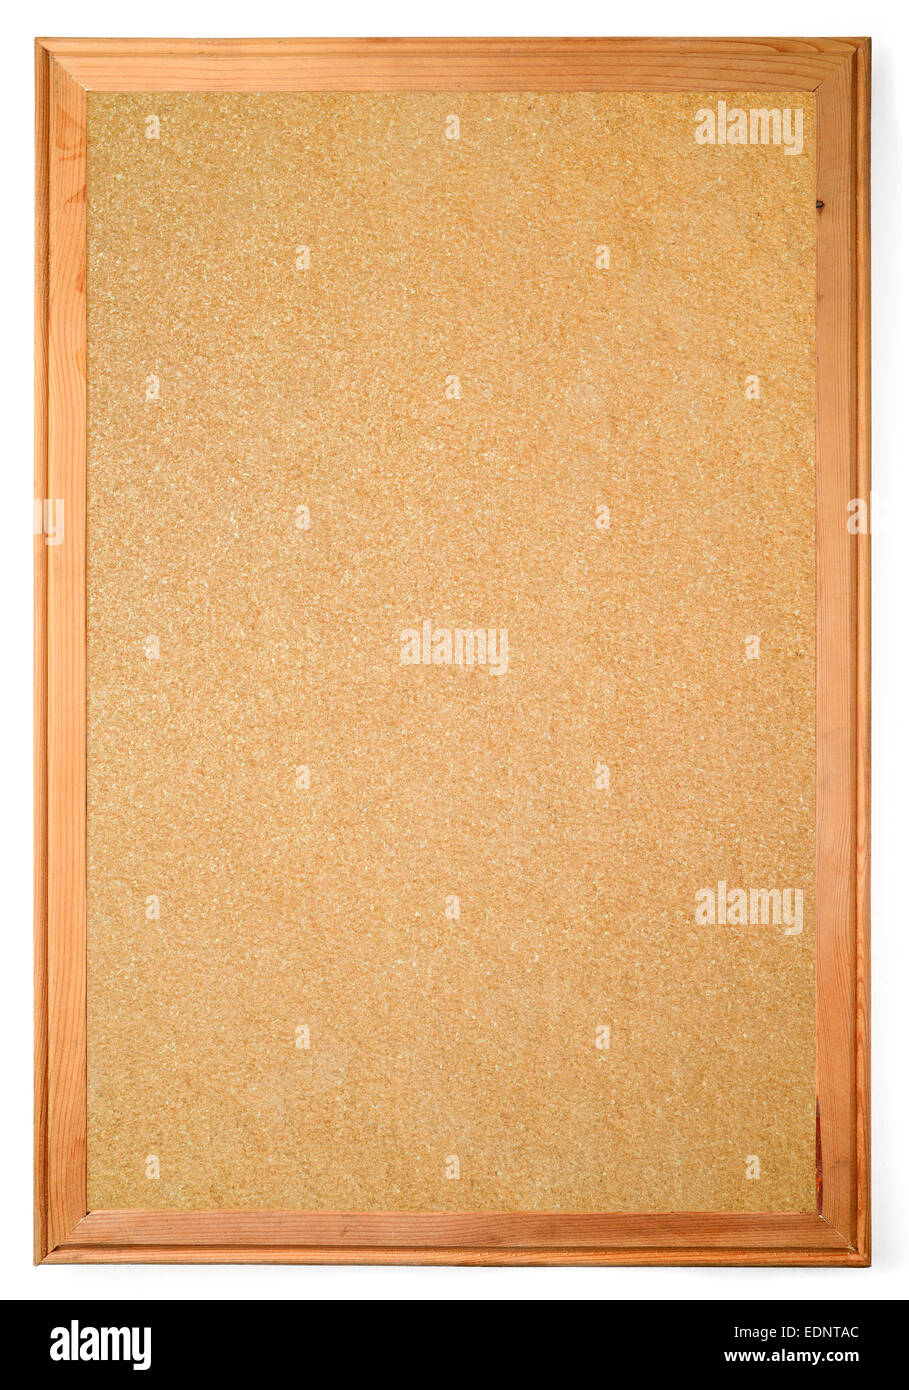 blank corkboard isolated on white Stock Photo